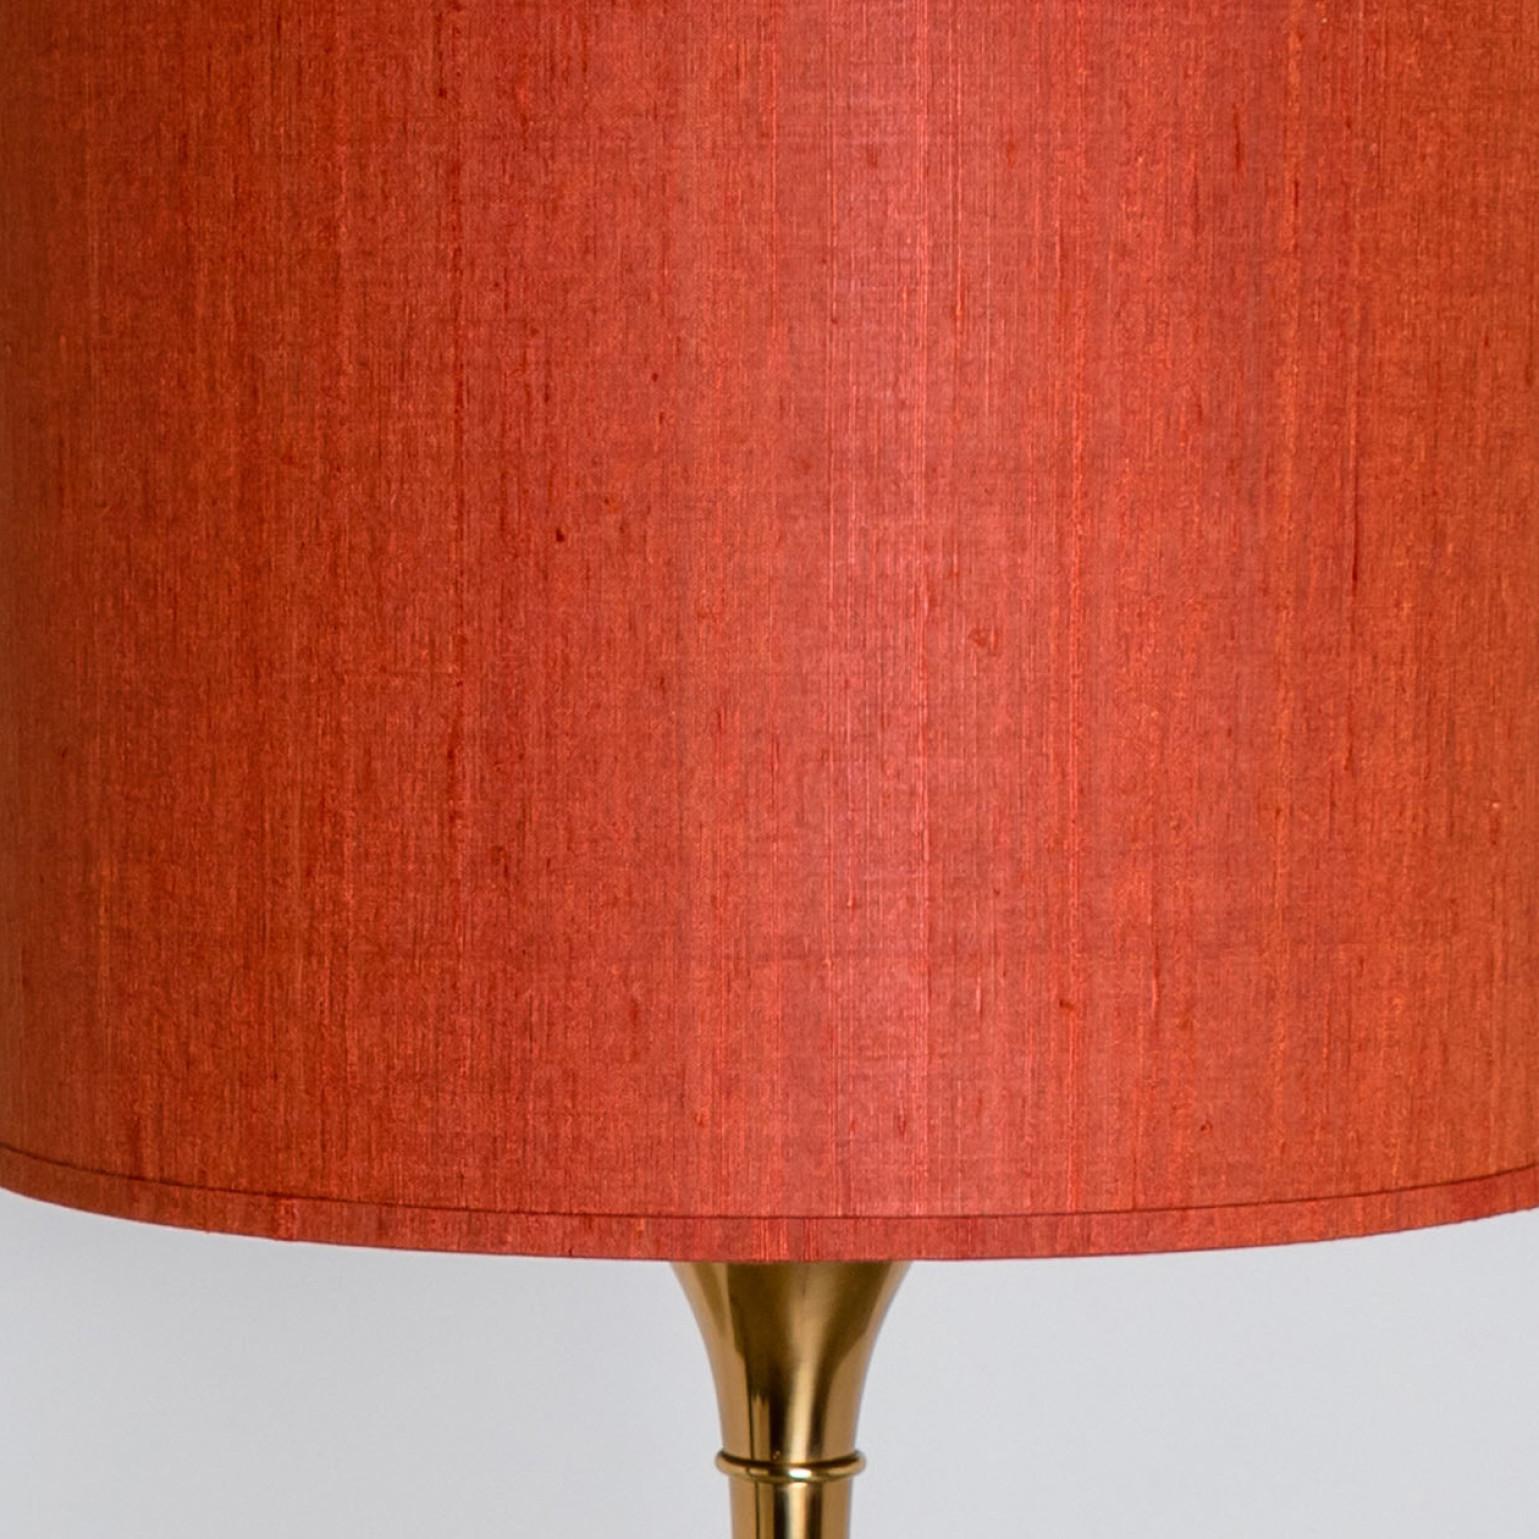 Floor Lamp Gold Designed by Ingo Maurer, Europe, Germany, 1968 For Sale 4